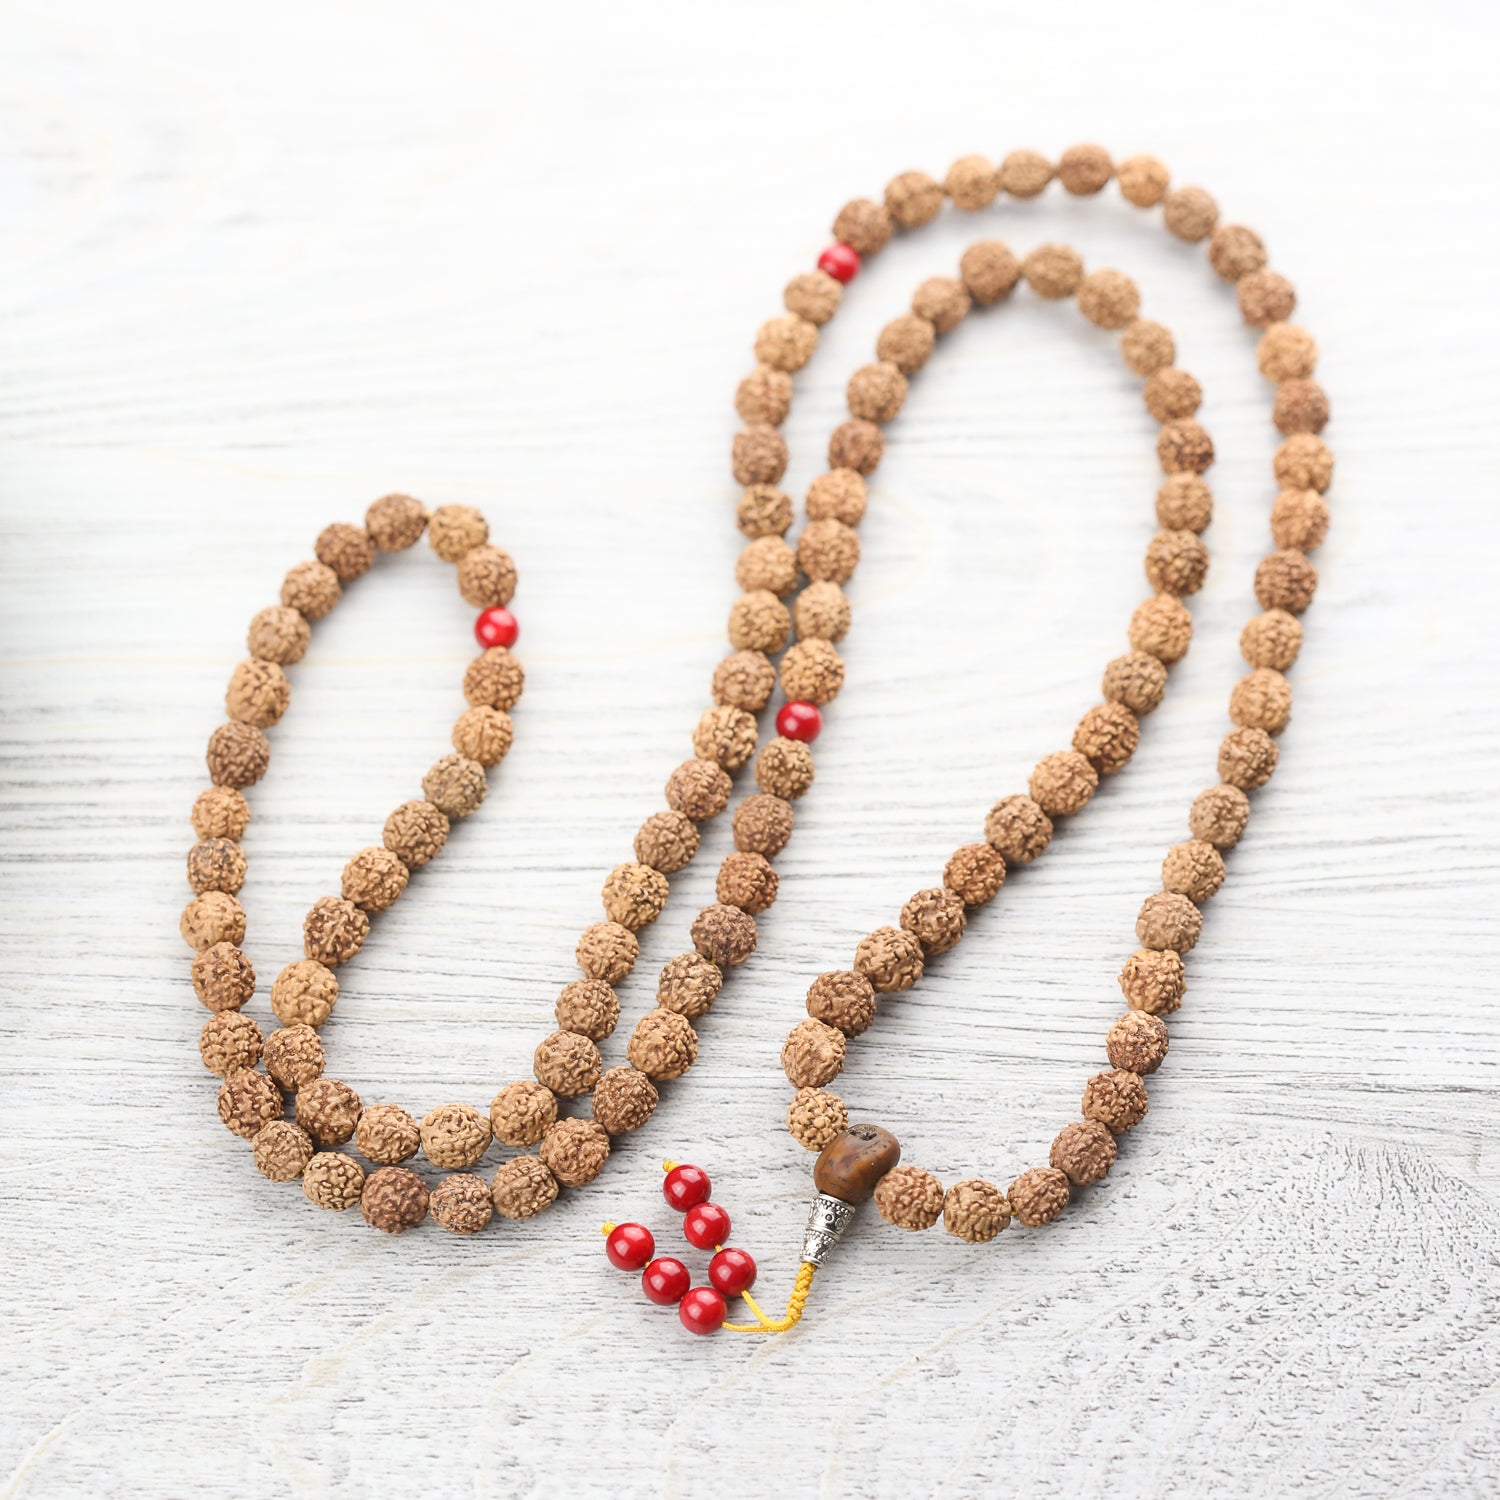 Tibetan Meditation Beads